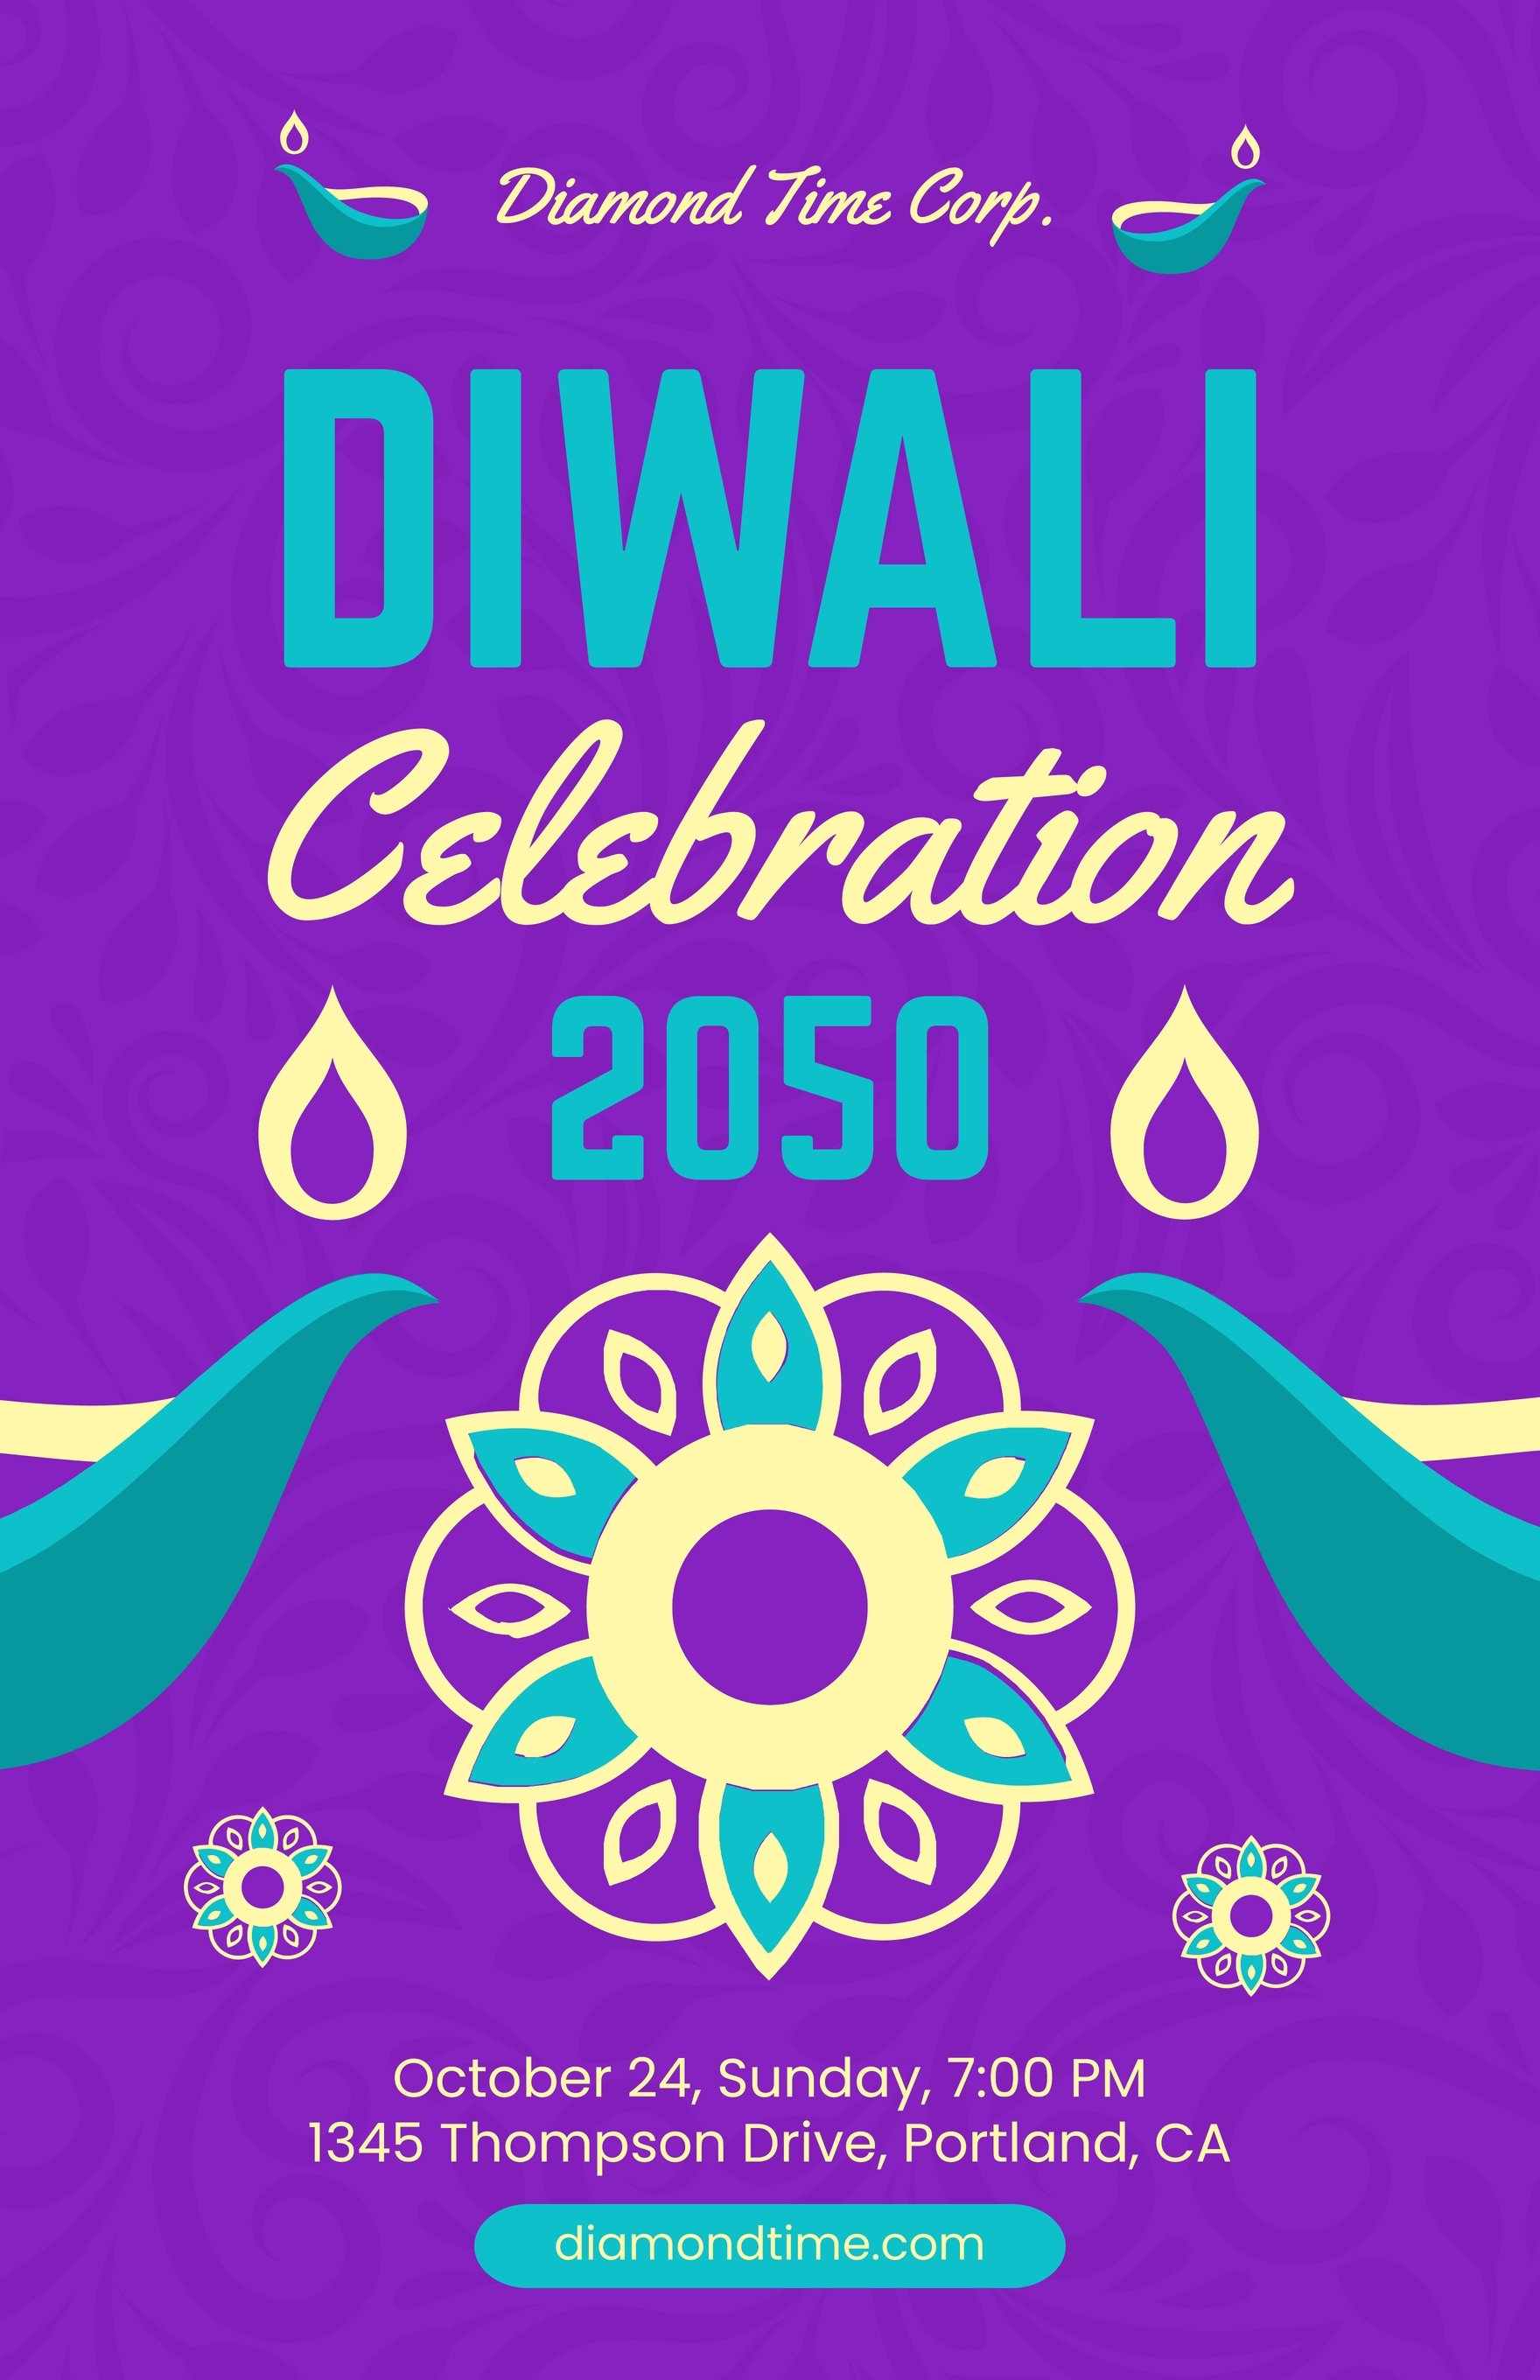 Free Diwali Event Poster in Word, Google Docs, Illustrator, PSD, Apple Pages, Publisher, EPS, SVG, JPG, PNG